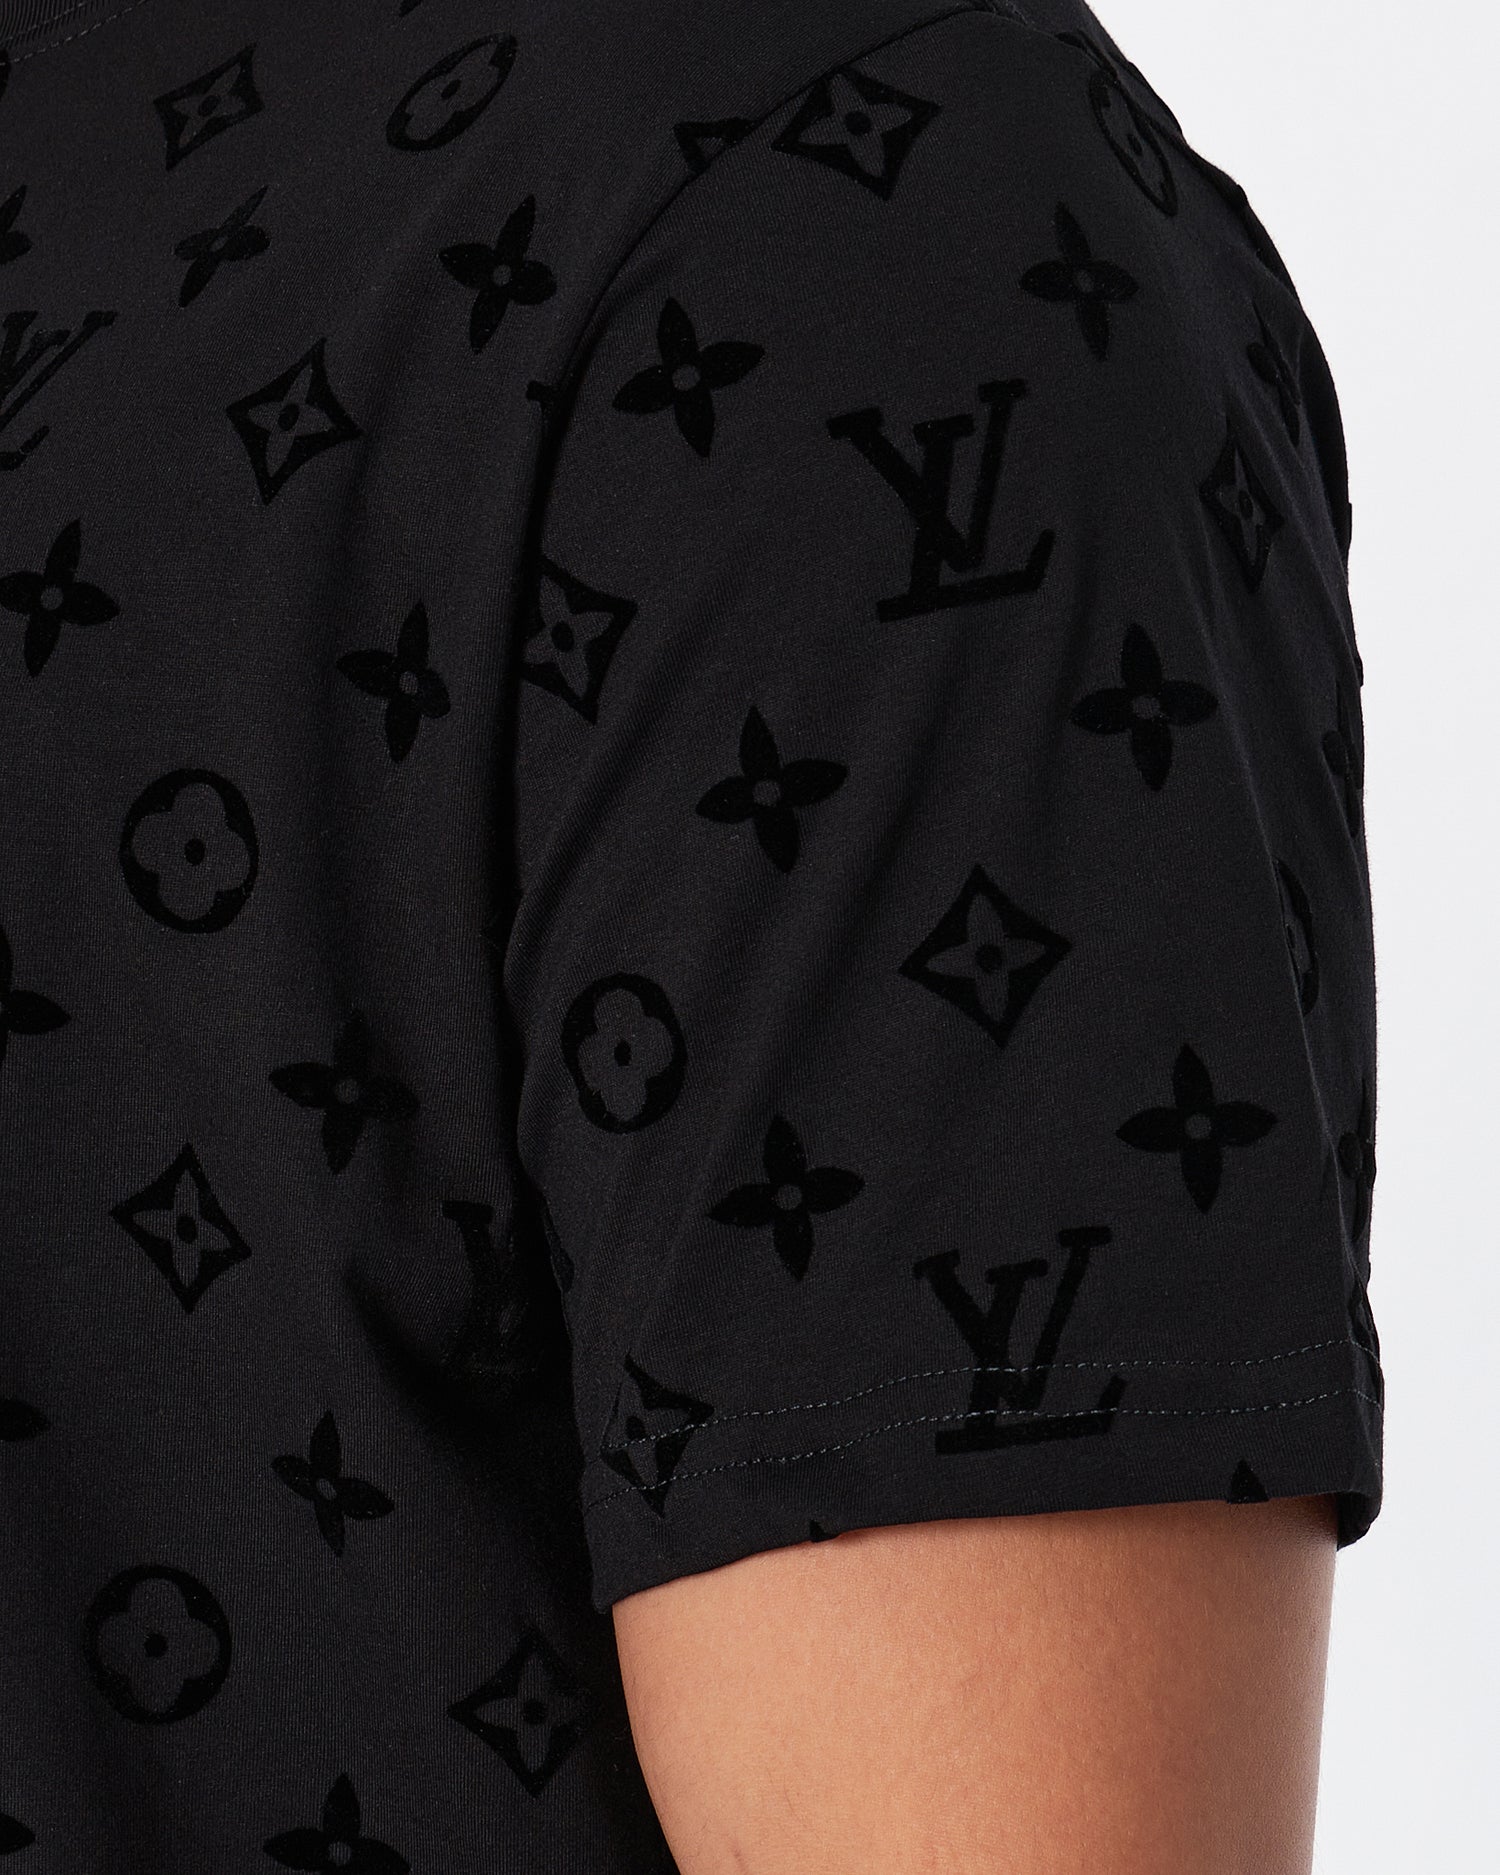 LV Monogram Embossed Over Printed Men Black T-Shirt 22.90